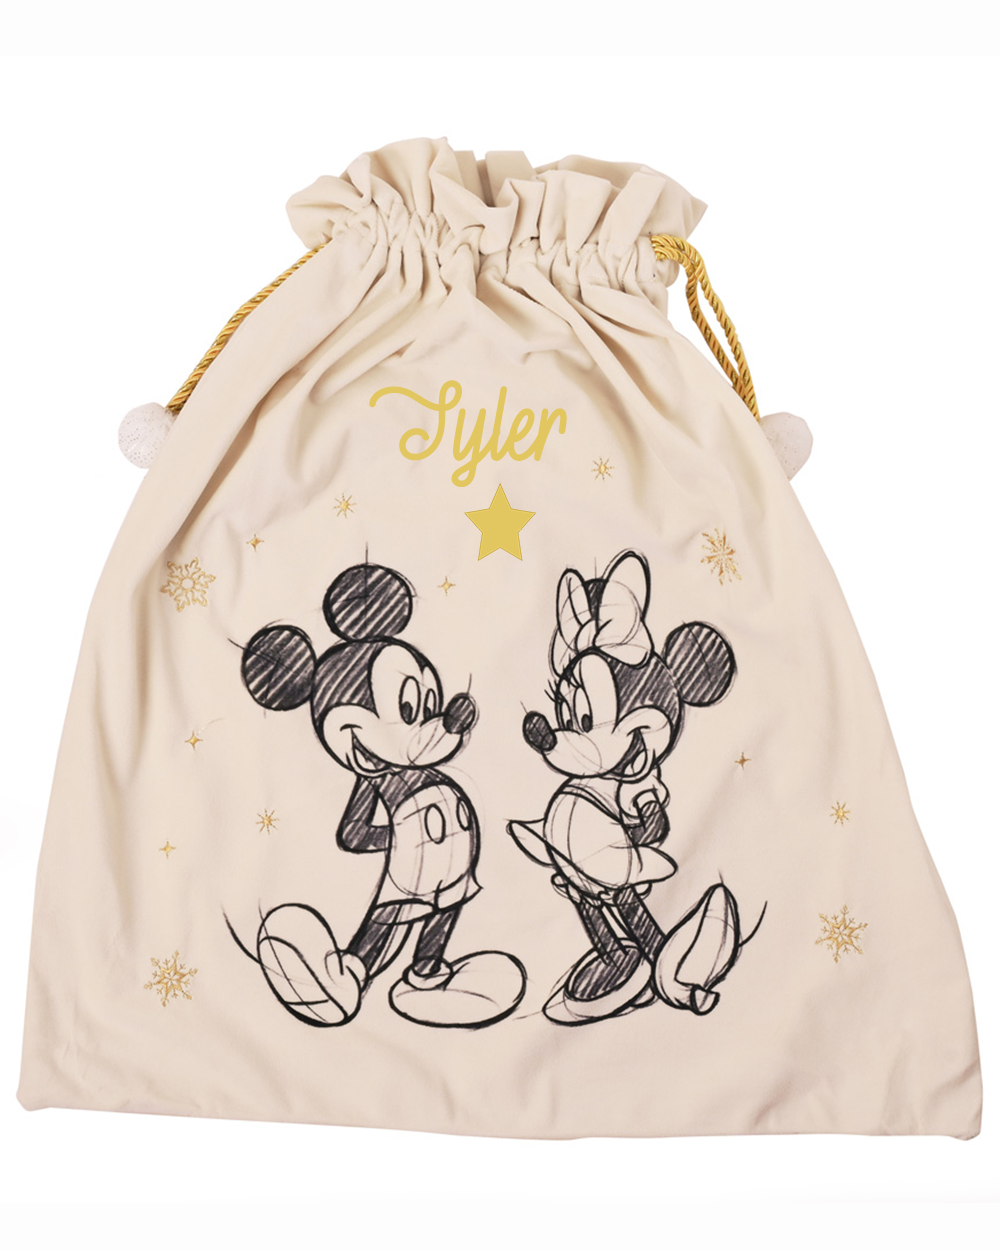 Name Star | Disney Mickey & Minnie Mouse Santa Sack